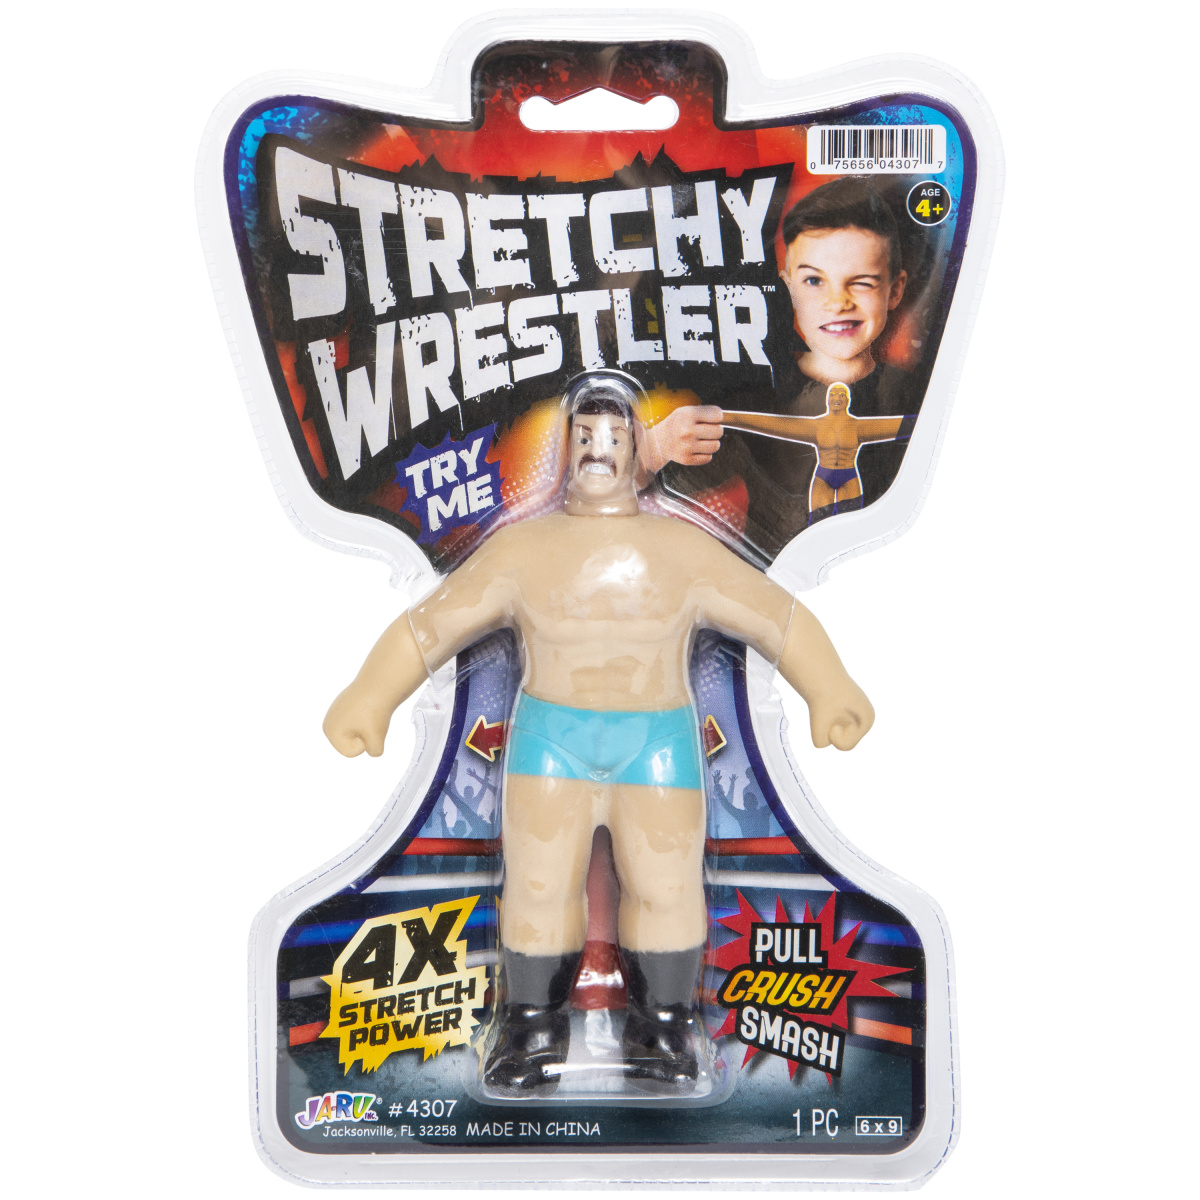 Stretchy Wrestler™ Figure